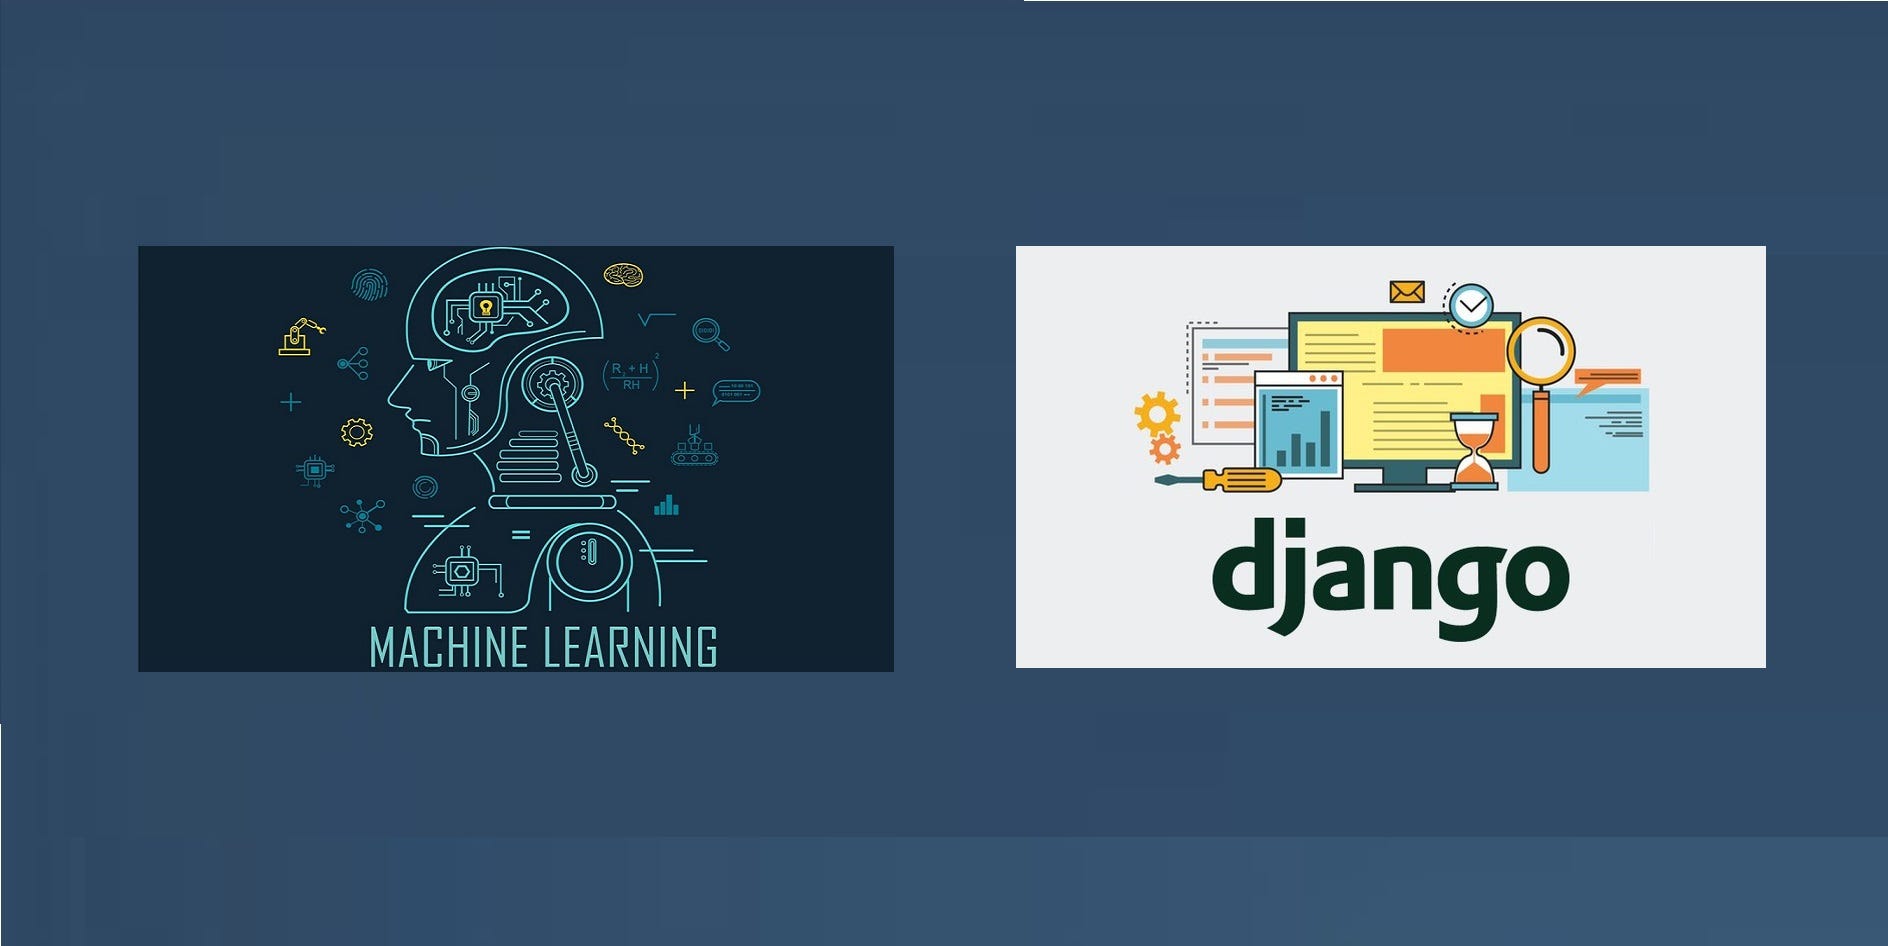 django and machine learning